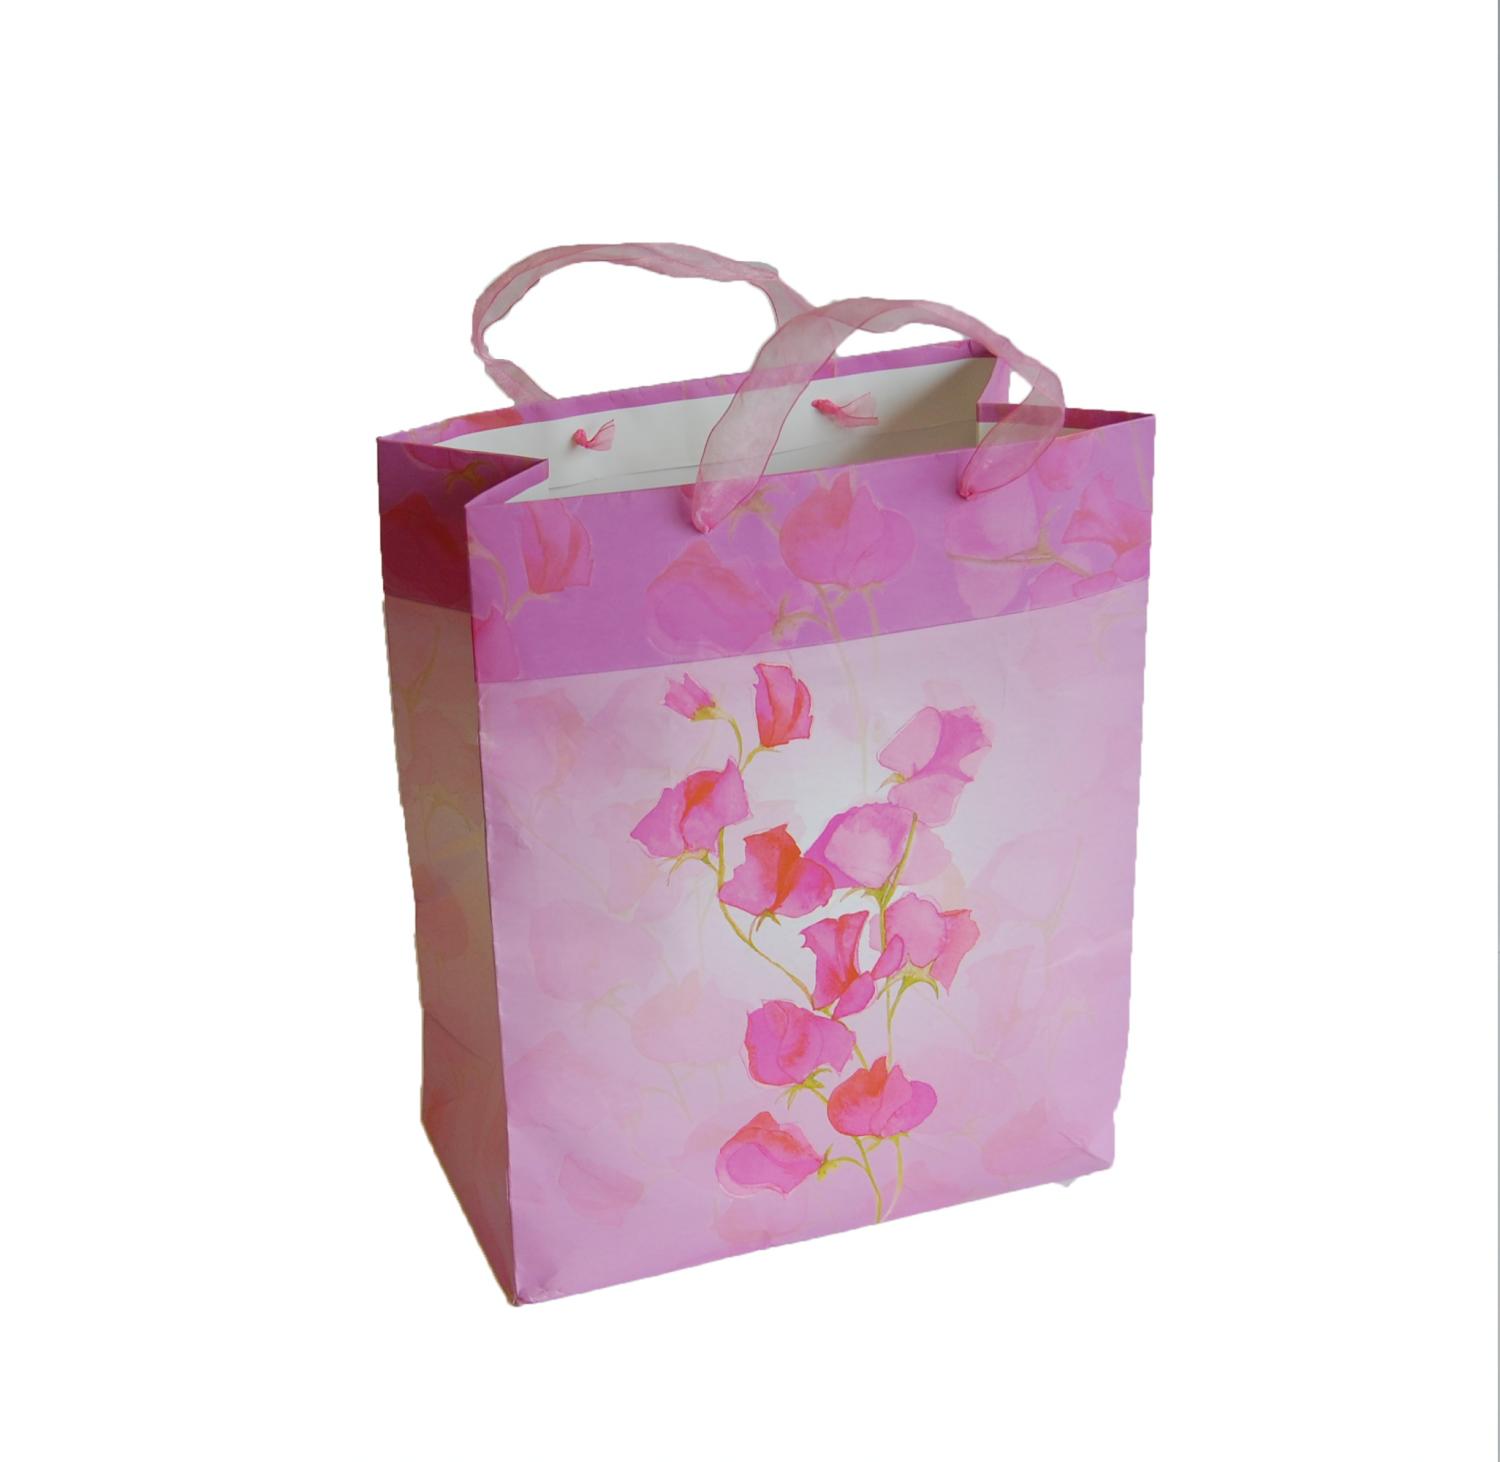 Pink rose patterned gift bag with pink organza ribbon handles